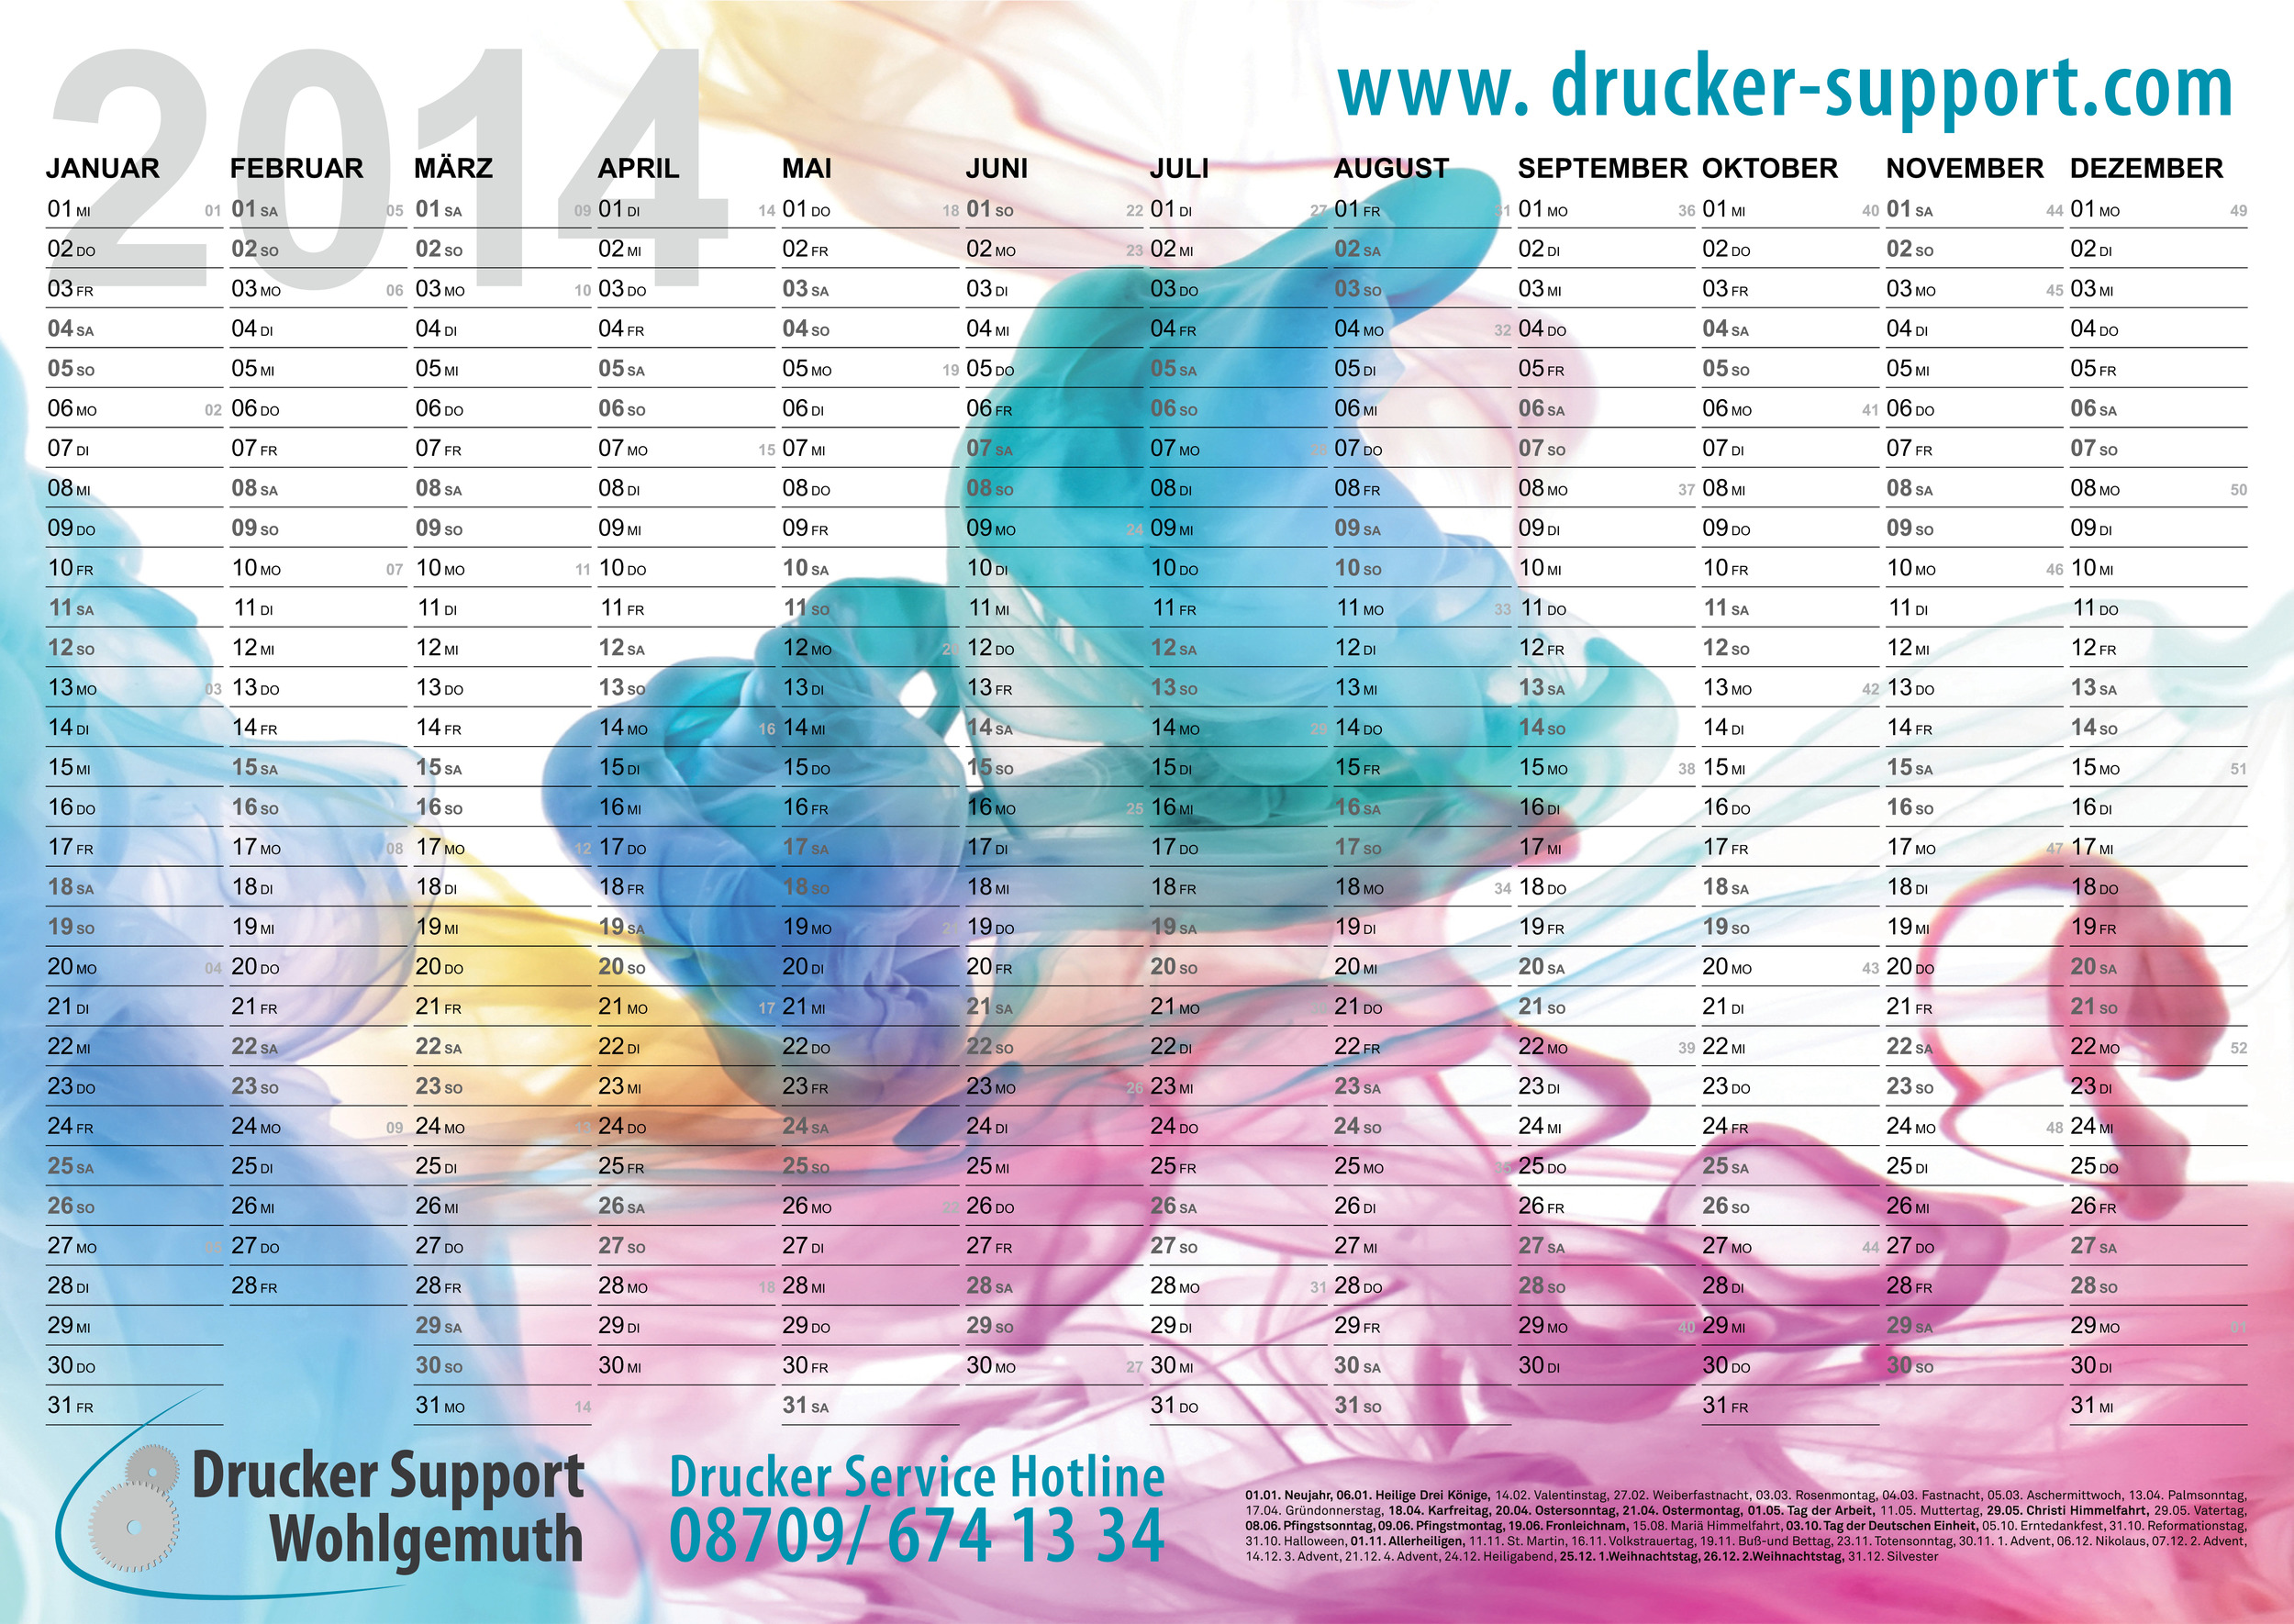 Drucker Support Wohlgemuth Kalender 2014.jpg